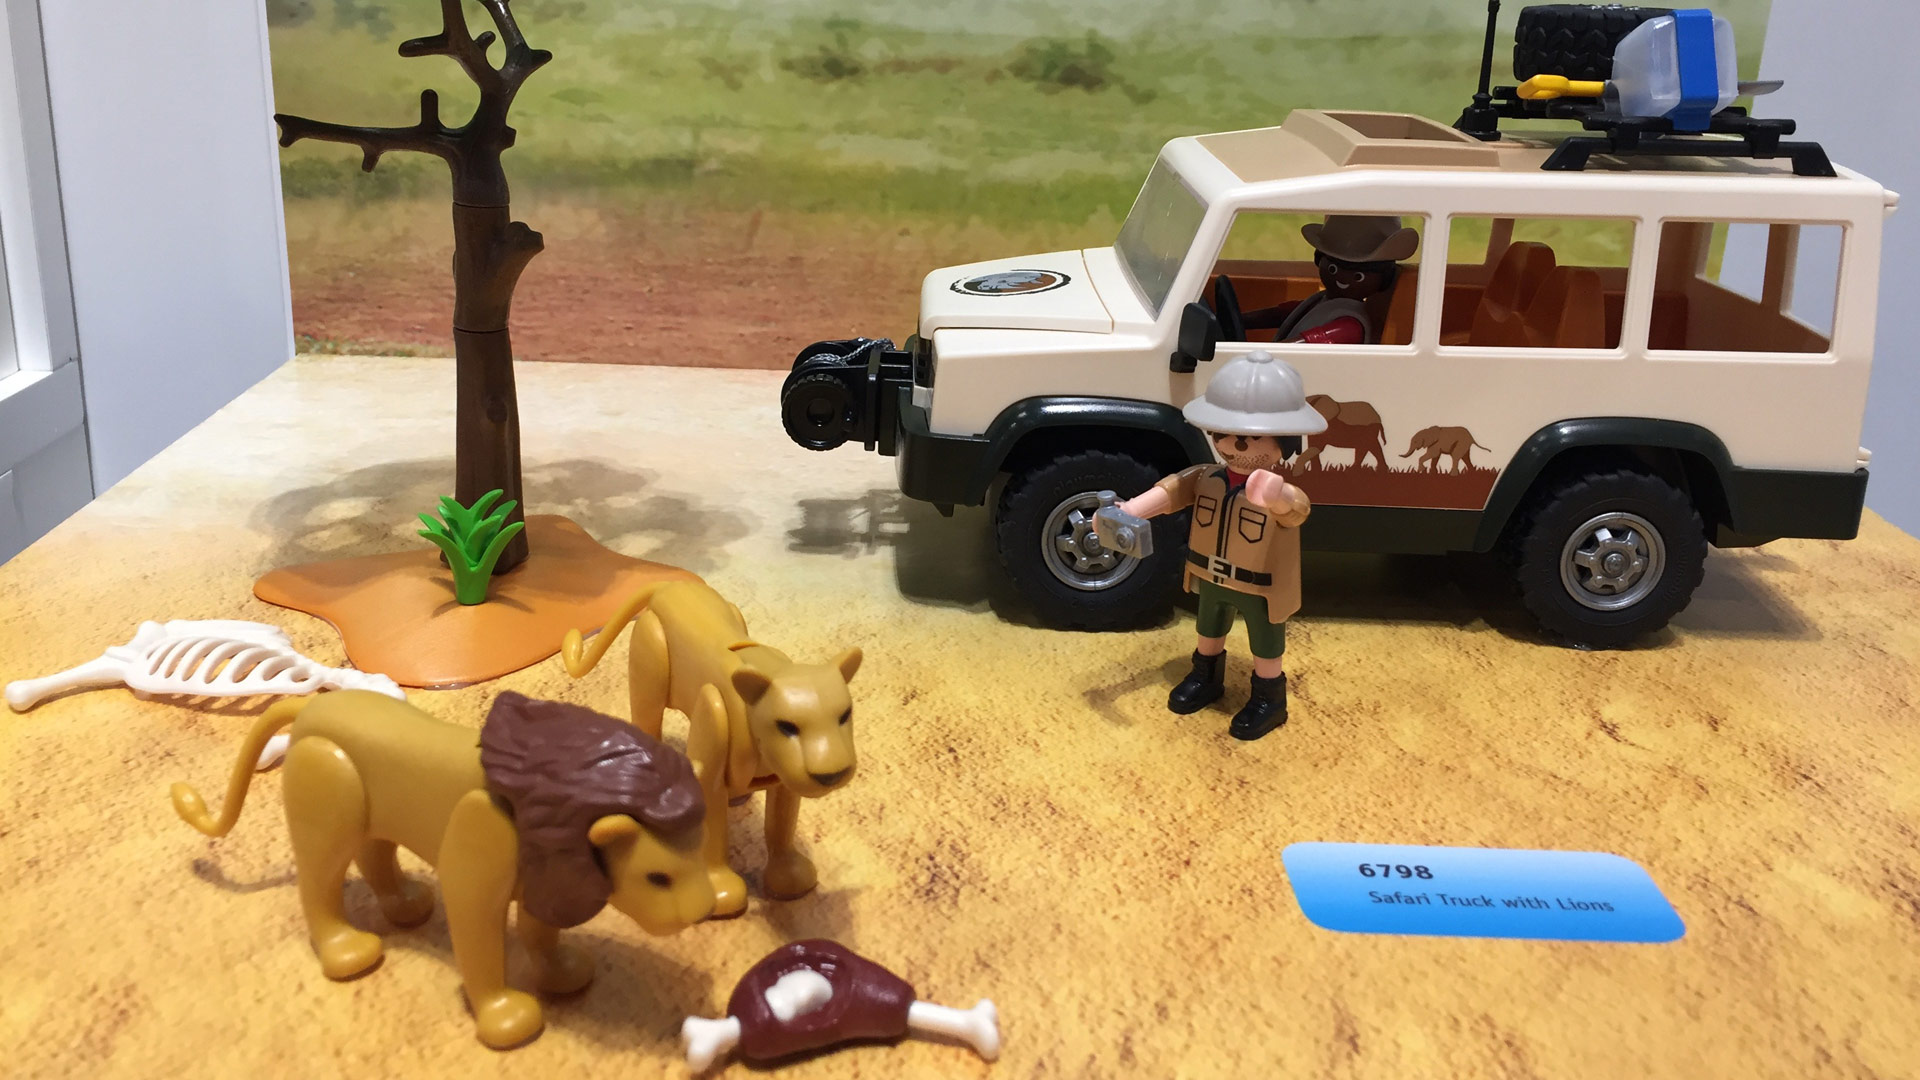 playmobil safari truck with lions